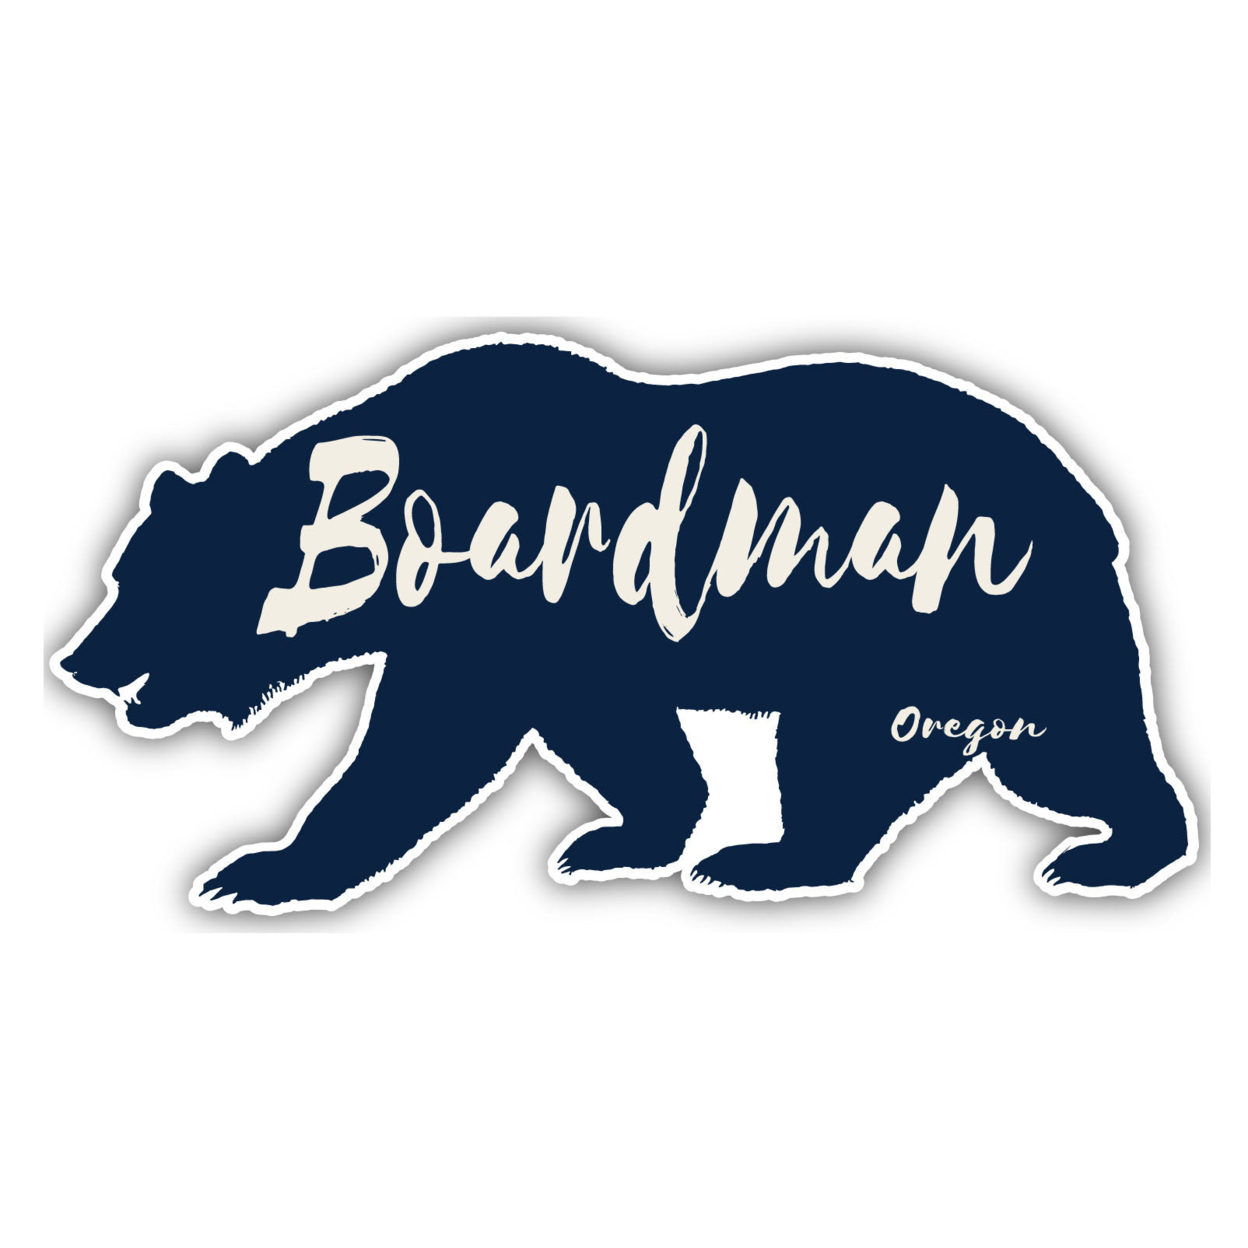 Boardman Oregon Souvenir Decorative Stickers (Choose Theme And Size) - 4-Pack, 12-Inch, Camp Life